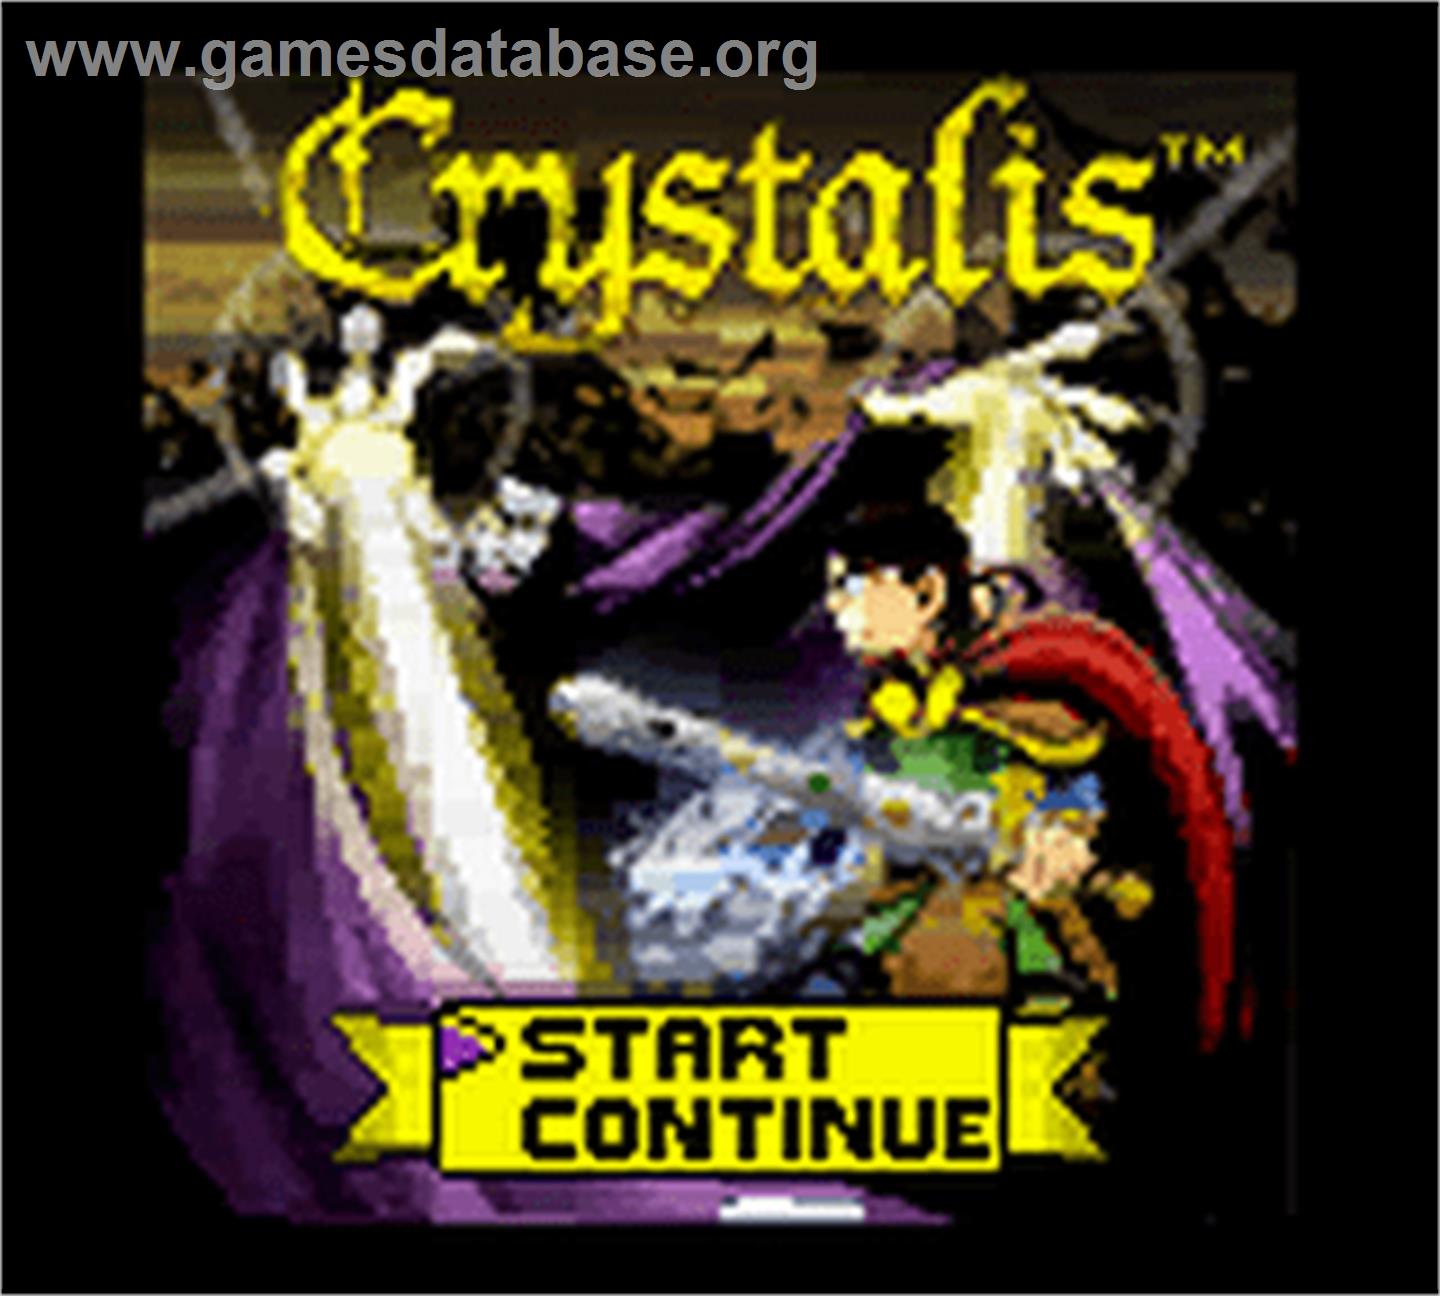 Crystalis - Nintendo Game Boy Color - Artwork - Title Screen